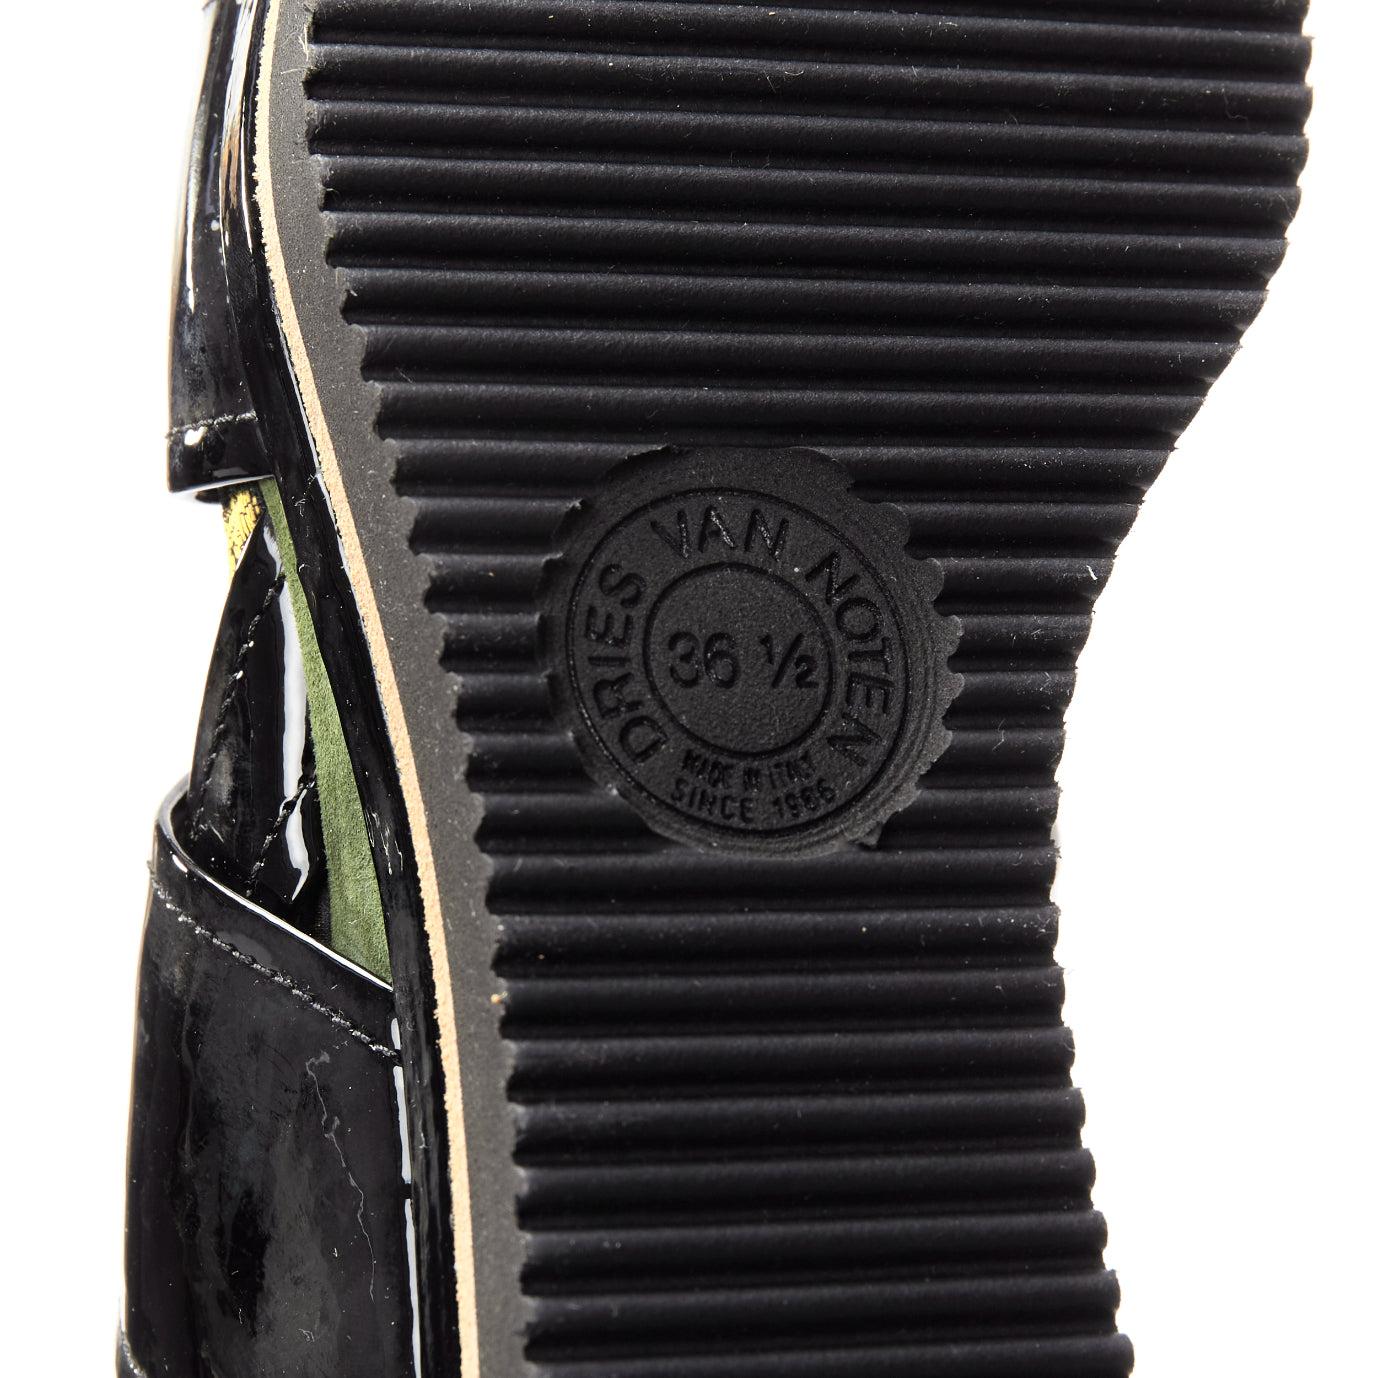 DRIES VAN NOTEN balck patent floral broade green suede platform sandal EU36.5 For Sale 6